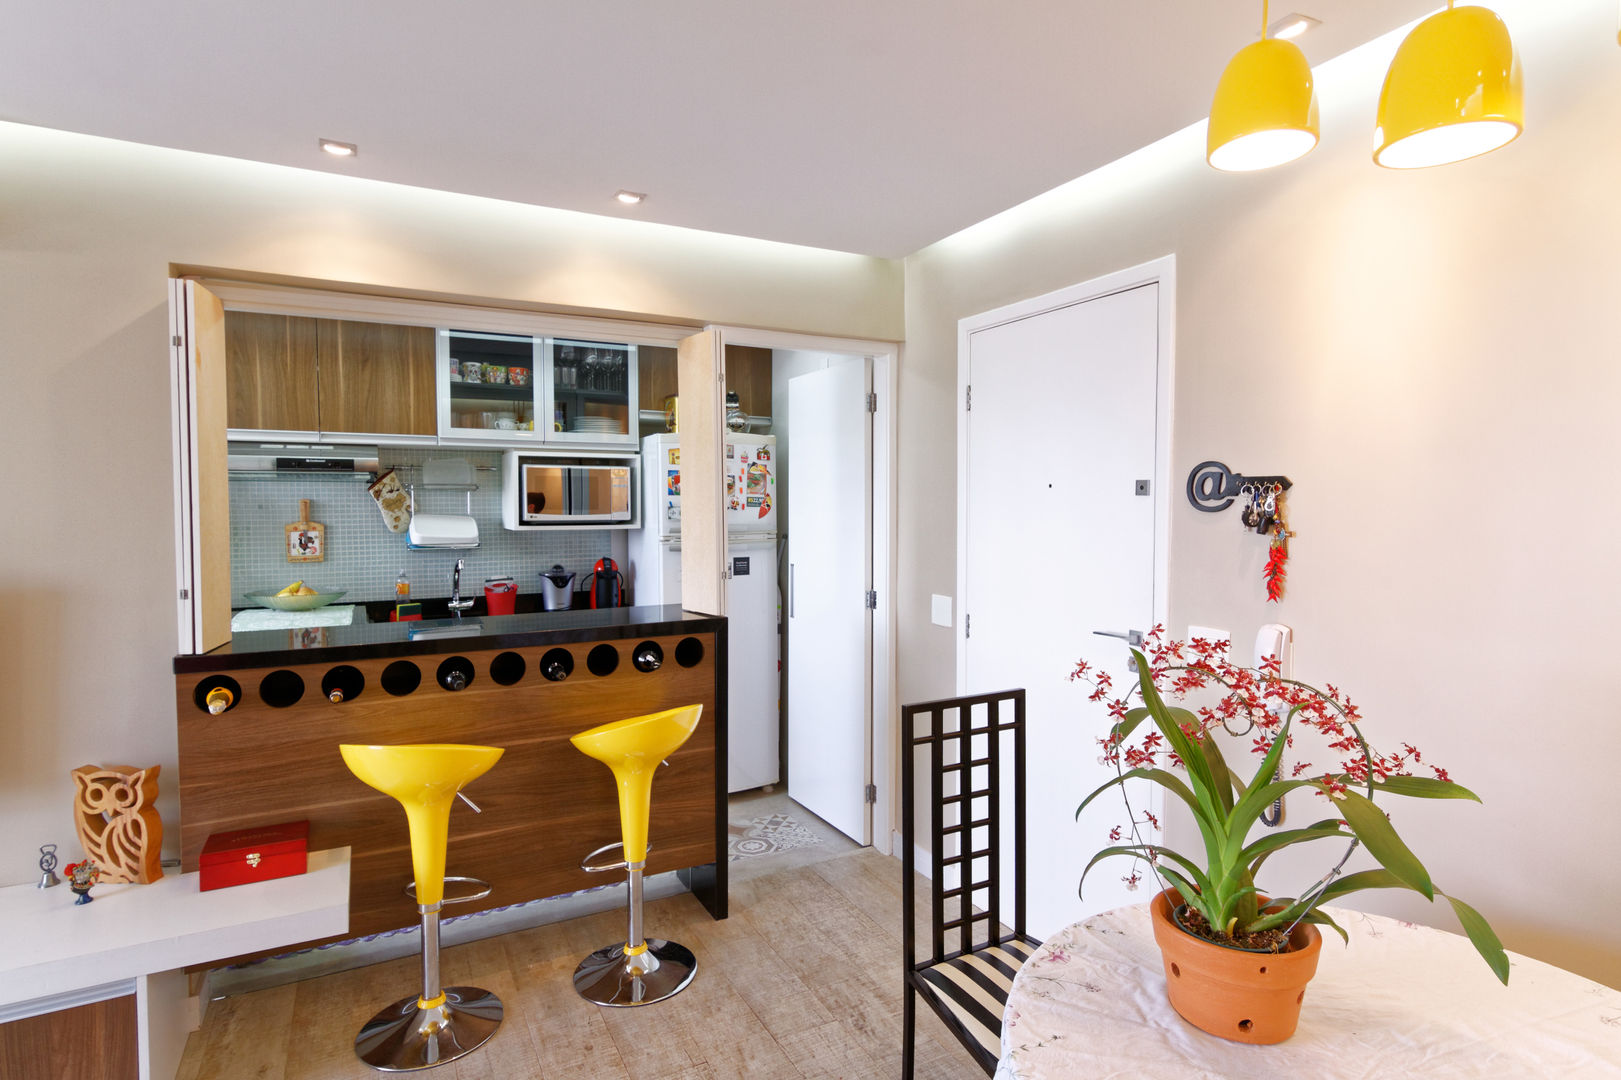 Apartamento Parque Butantã - 50m², Raphael Civille Arquitetura Raphael Civille Arquitetura Comedores minimalistas